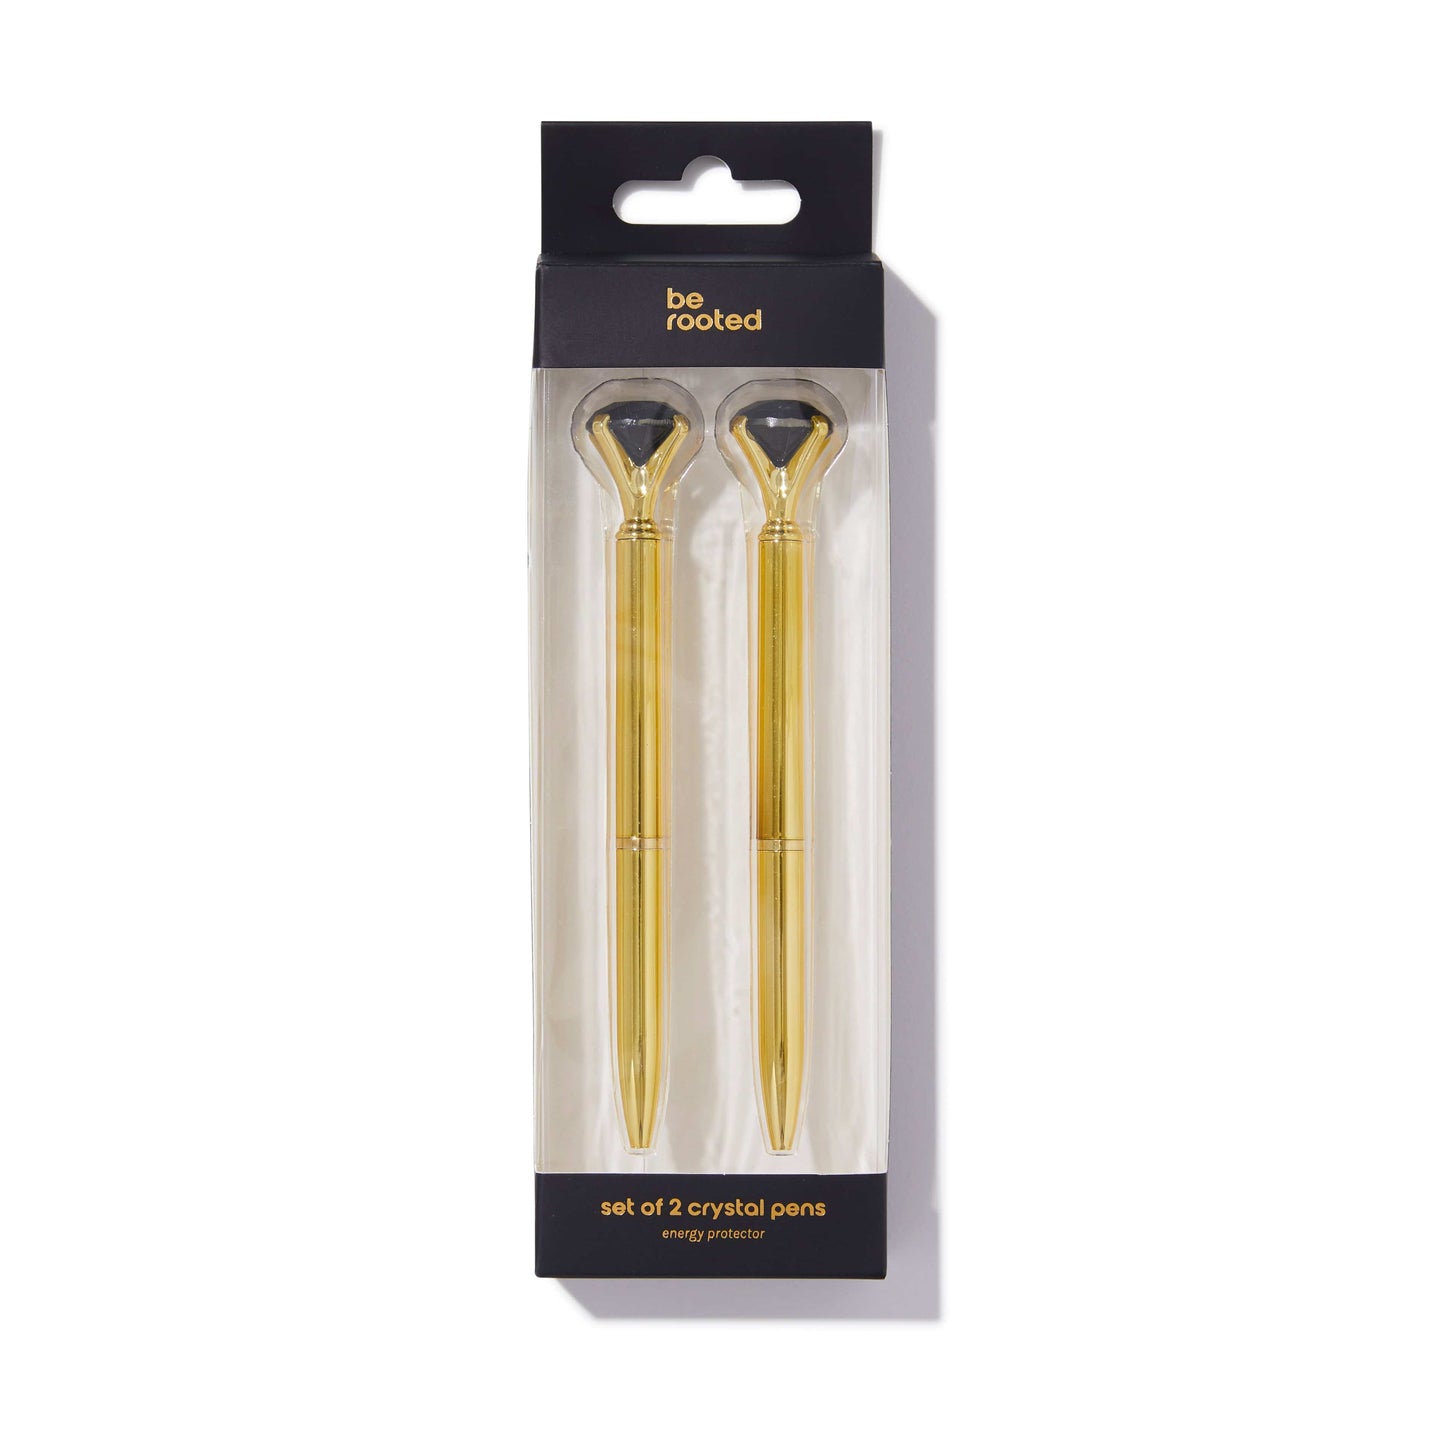 2PC Gold Crystal Pens - Black